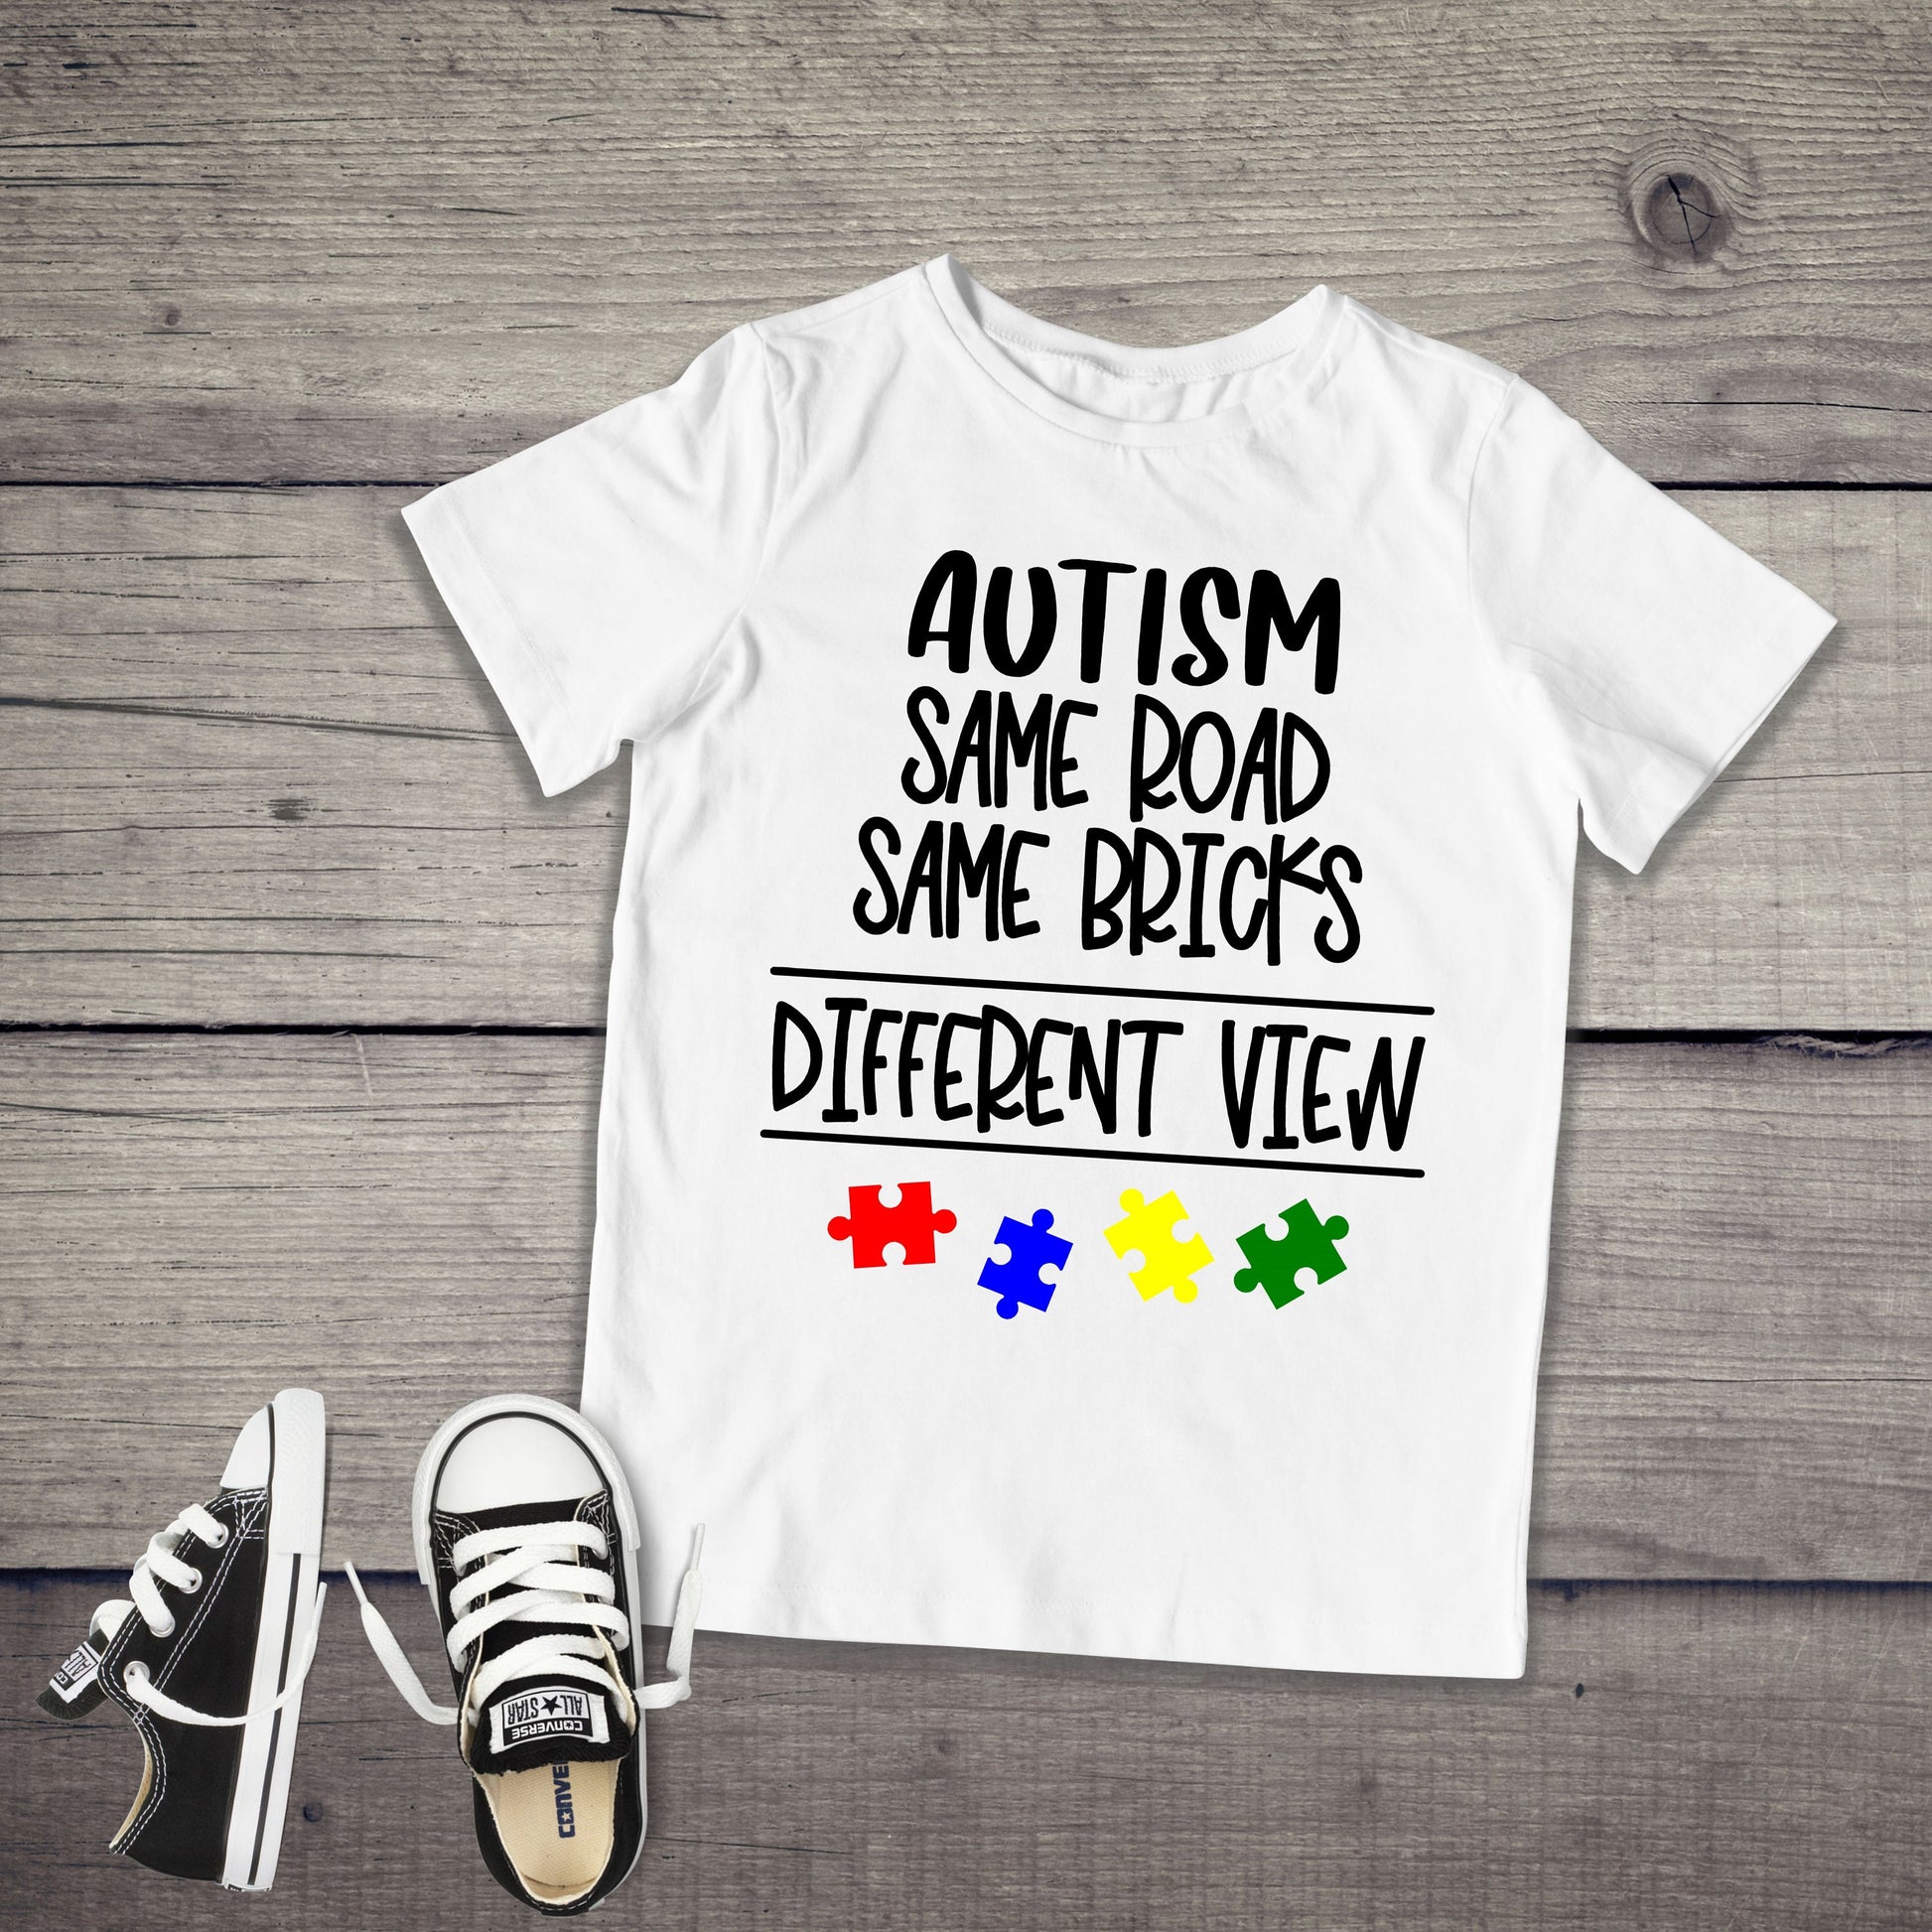 Autism Same Road Different Bricks Infant, Toddler or Kids Shirt or Bodysuit - Autism Awareness - Autism Kids Shirt - Puzzle Piece Shirt